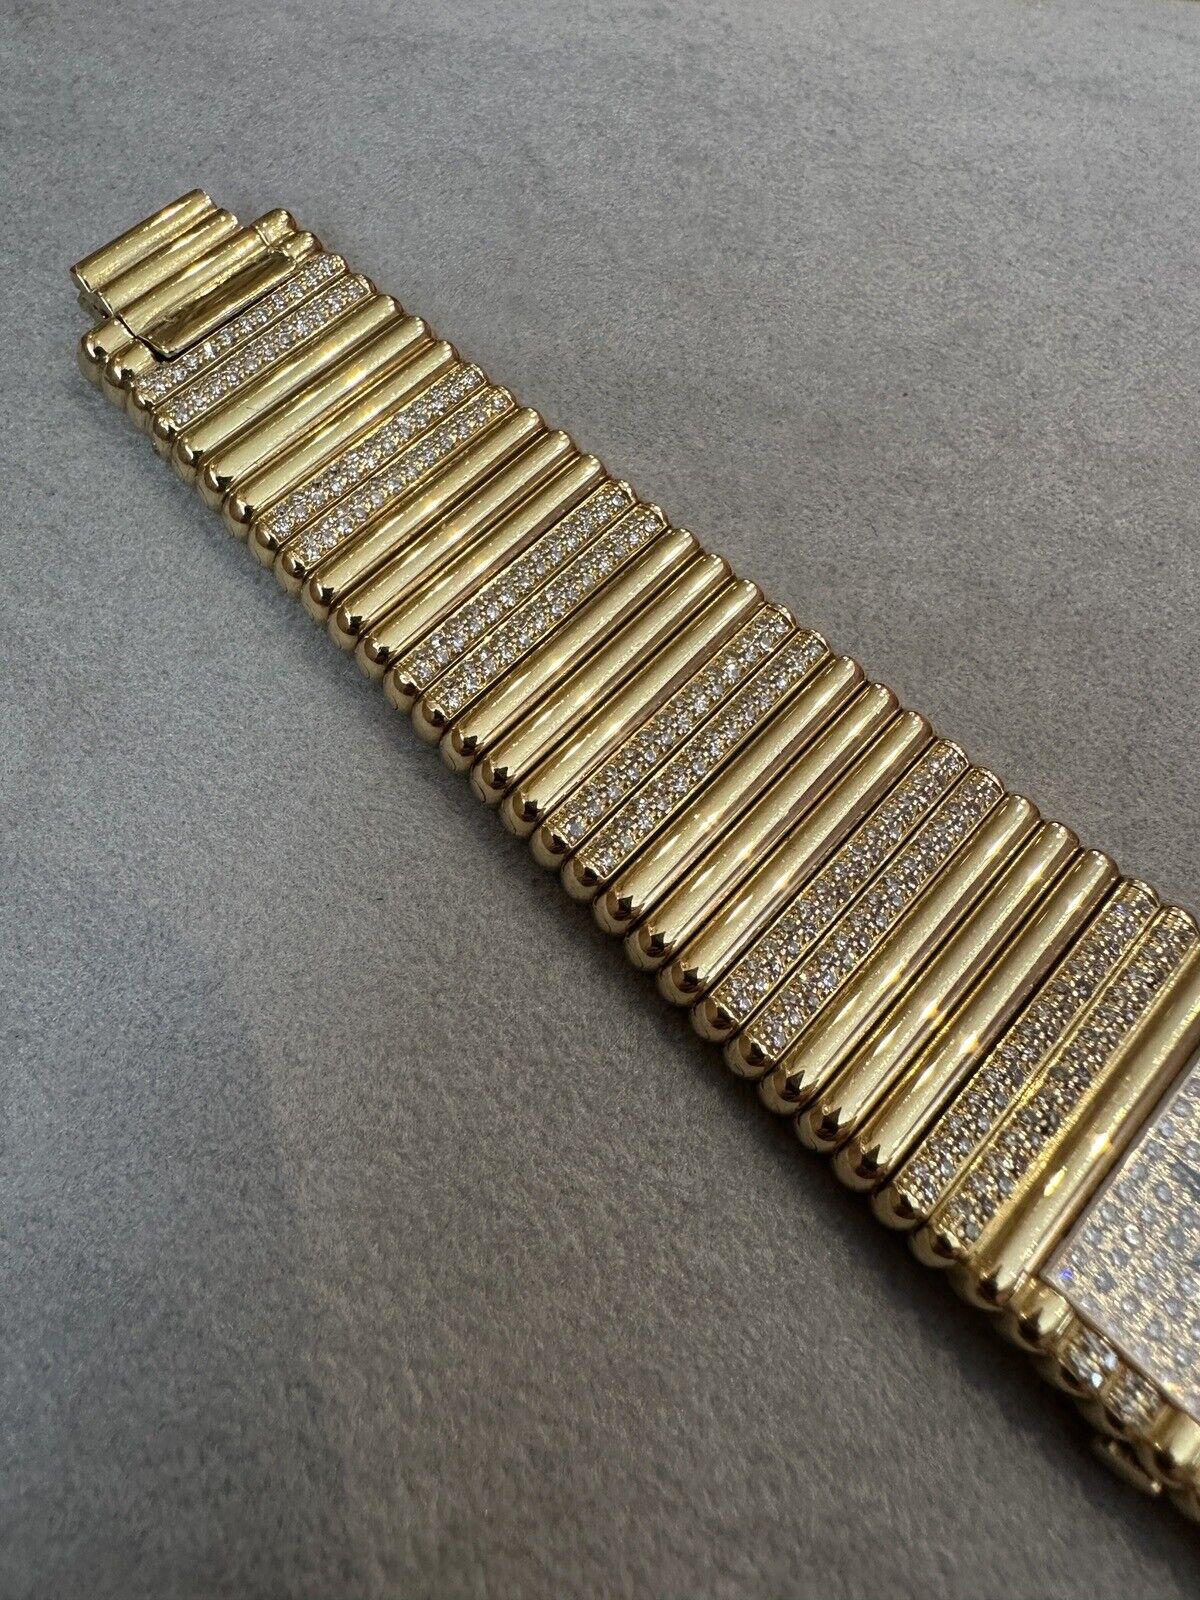 Piaget Emperador Factory Diamond and 18k Yellow Gold Watch 1